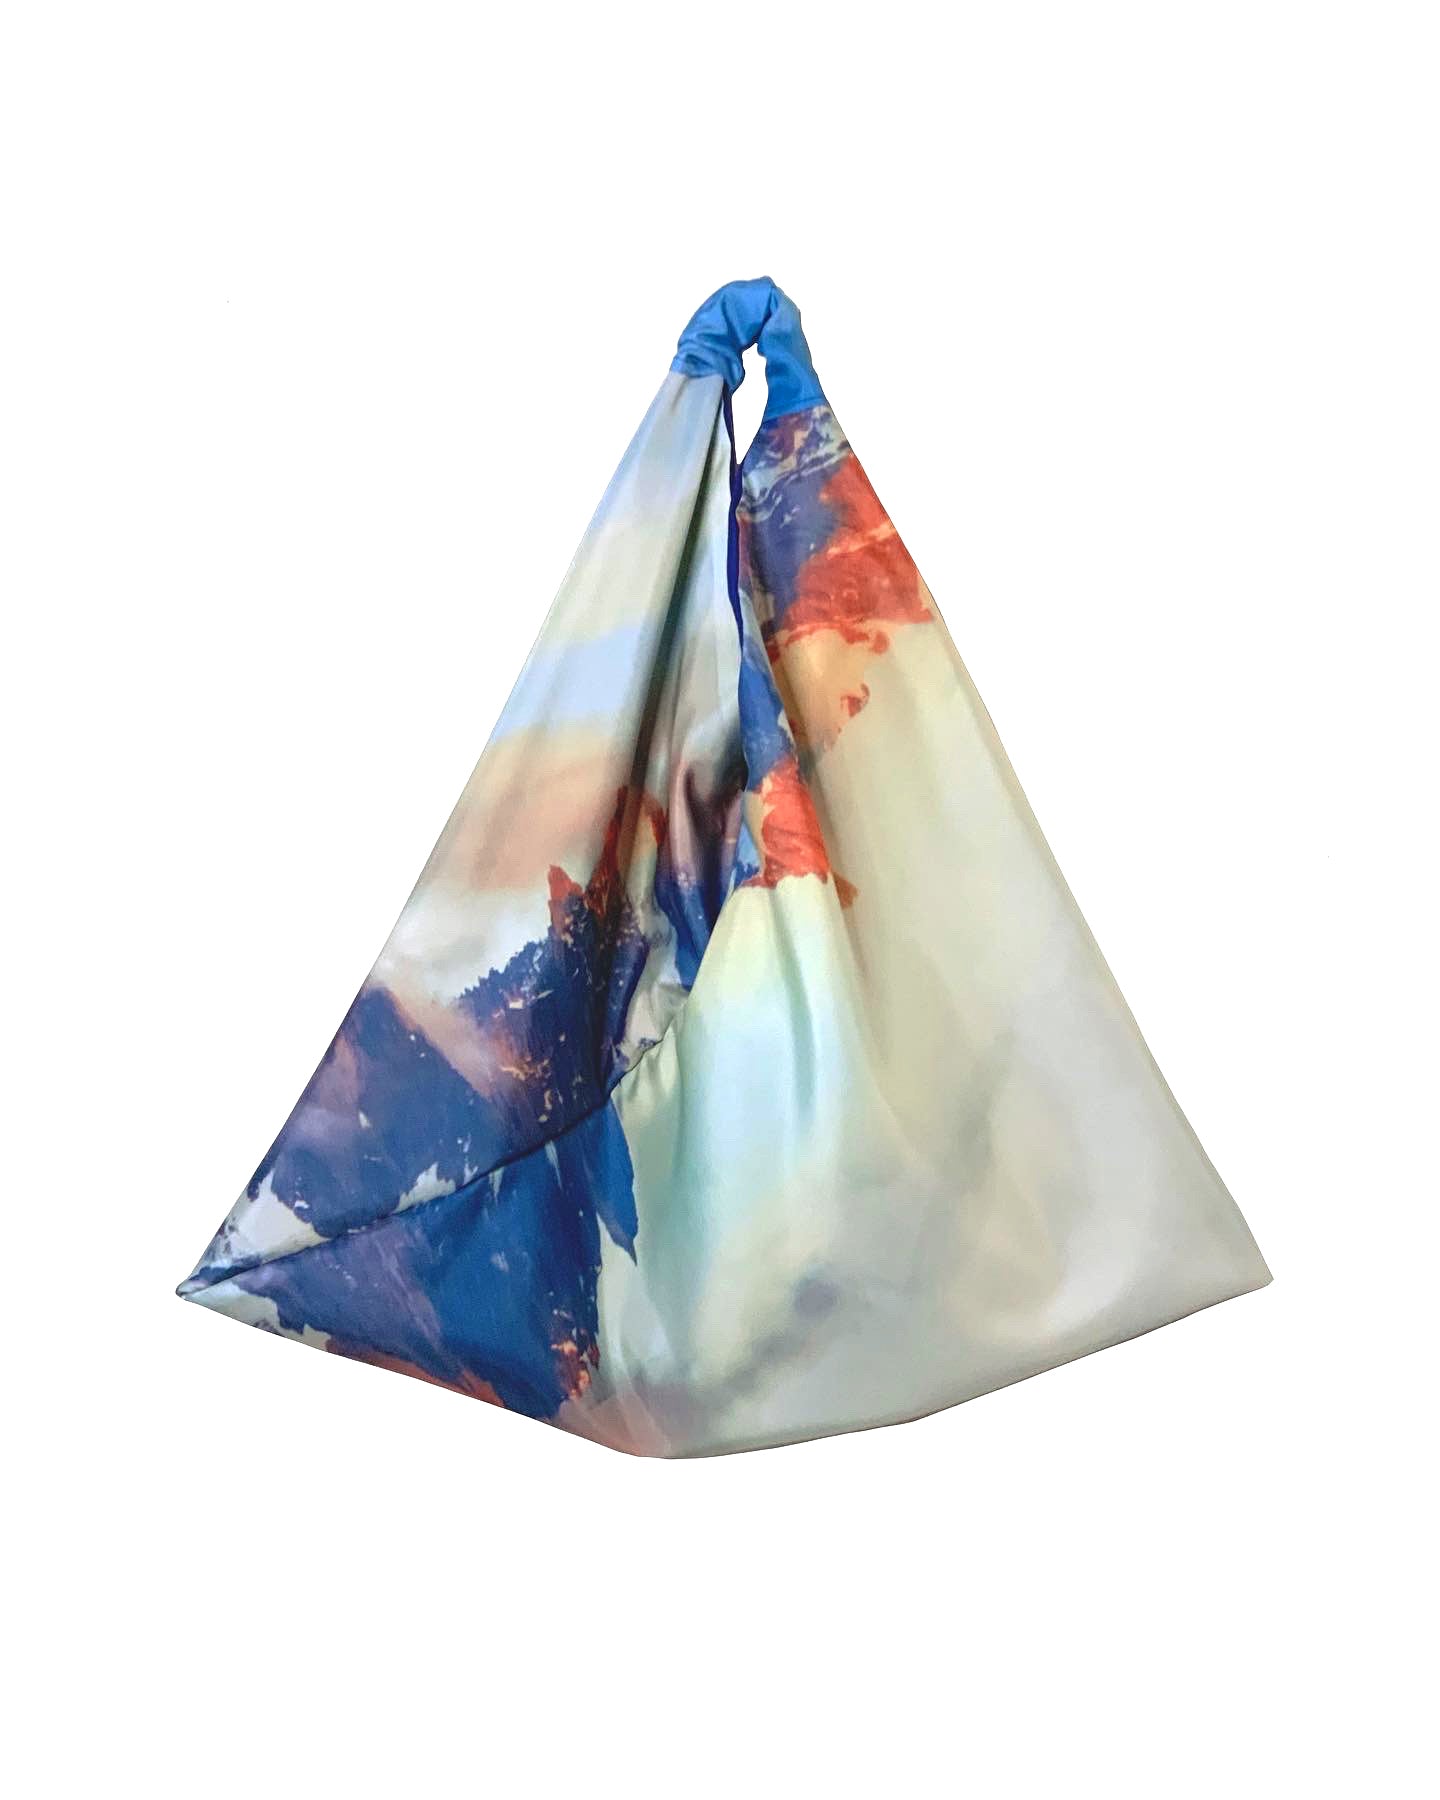 Reclaimed Shower Curtain Origami Bag